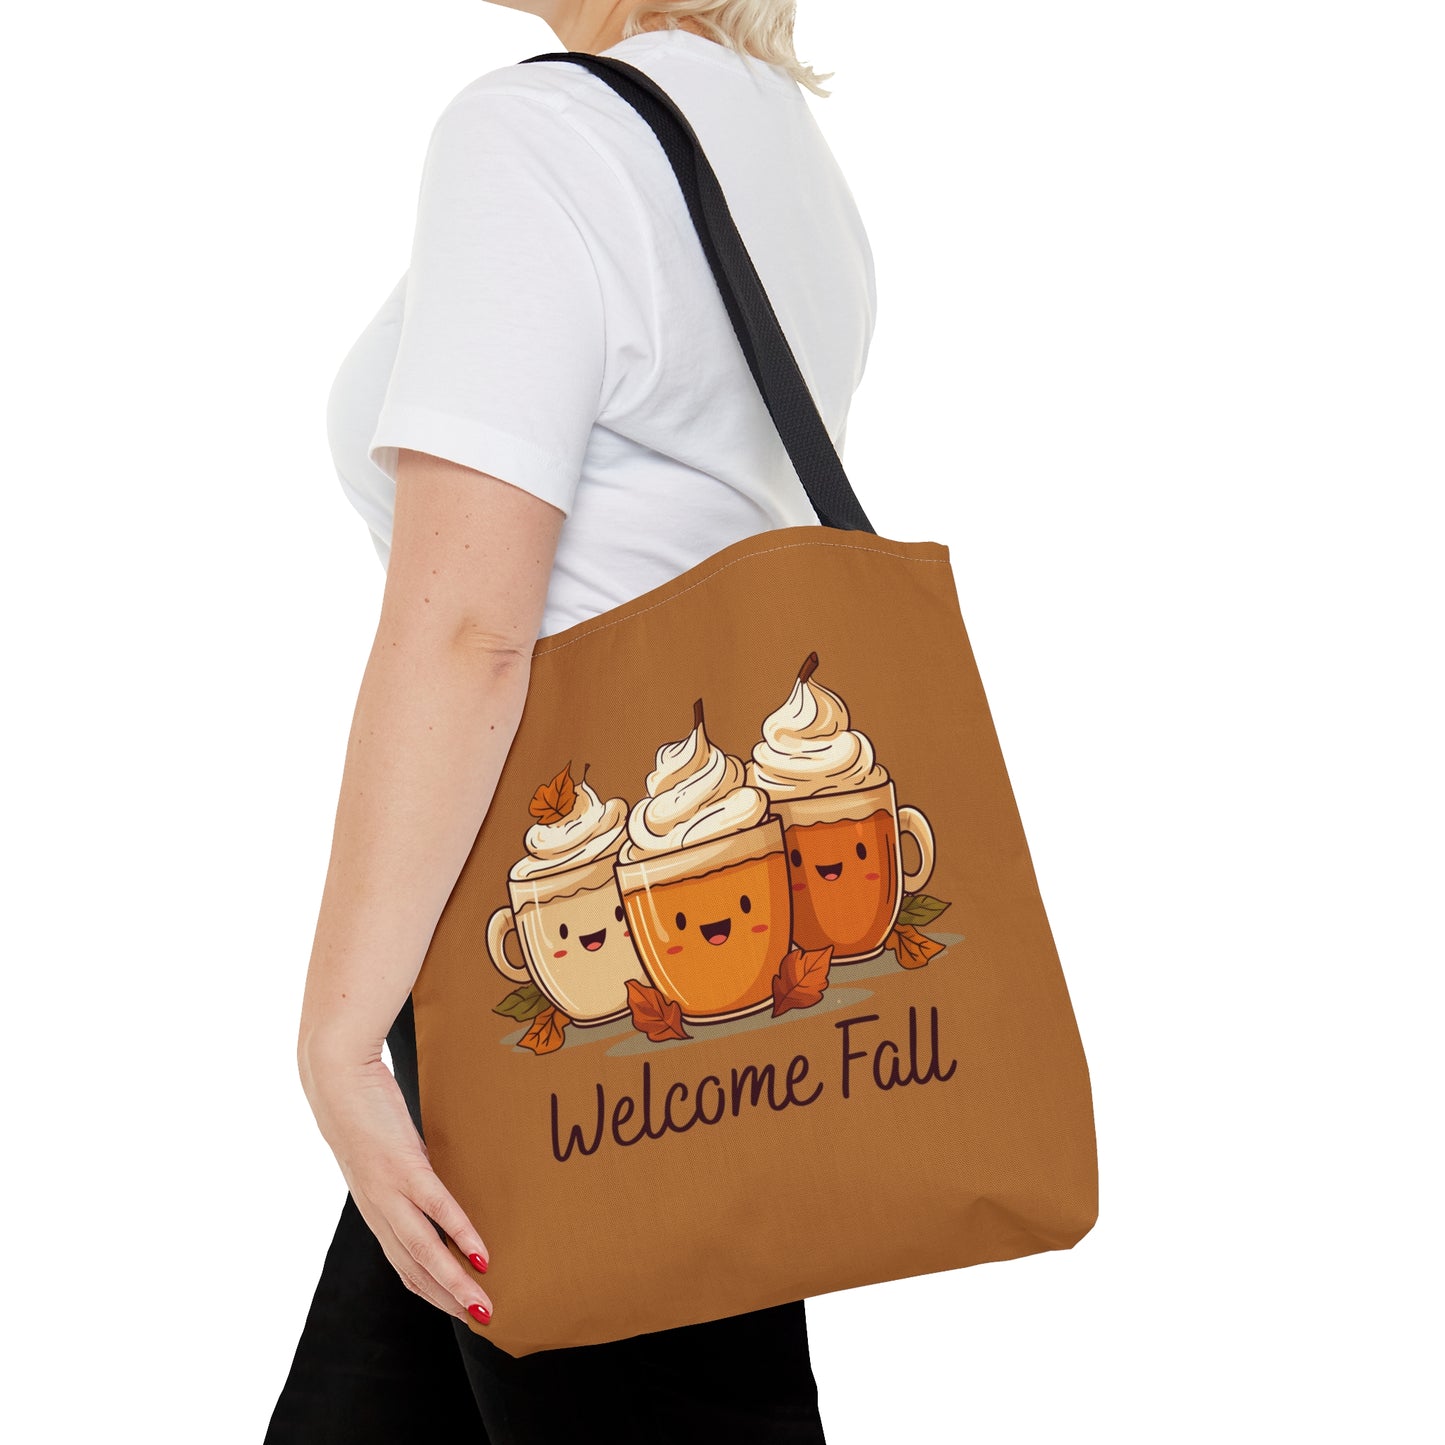 Welcome Fall Autumn Tote Bag